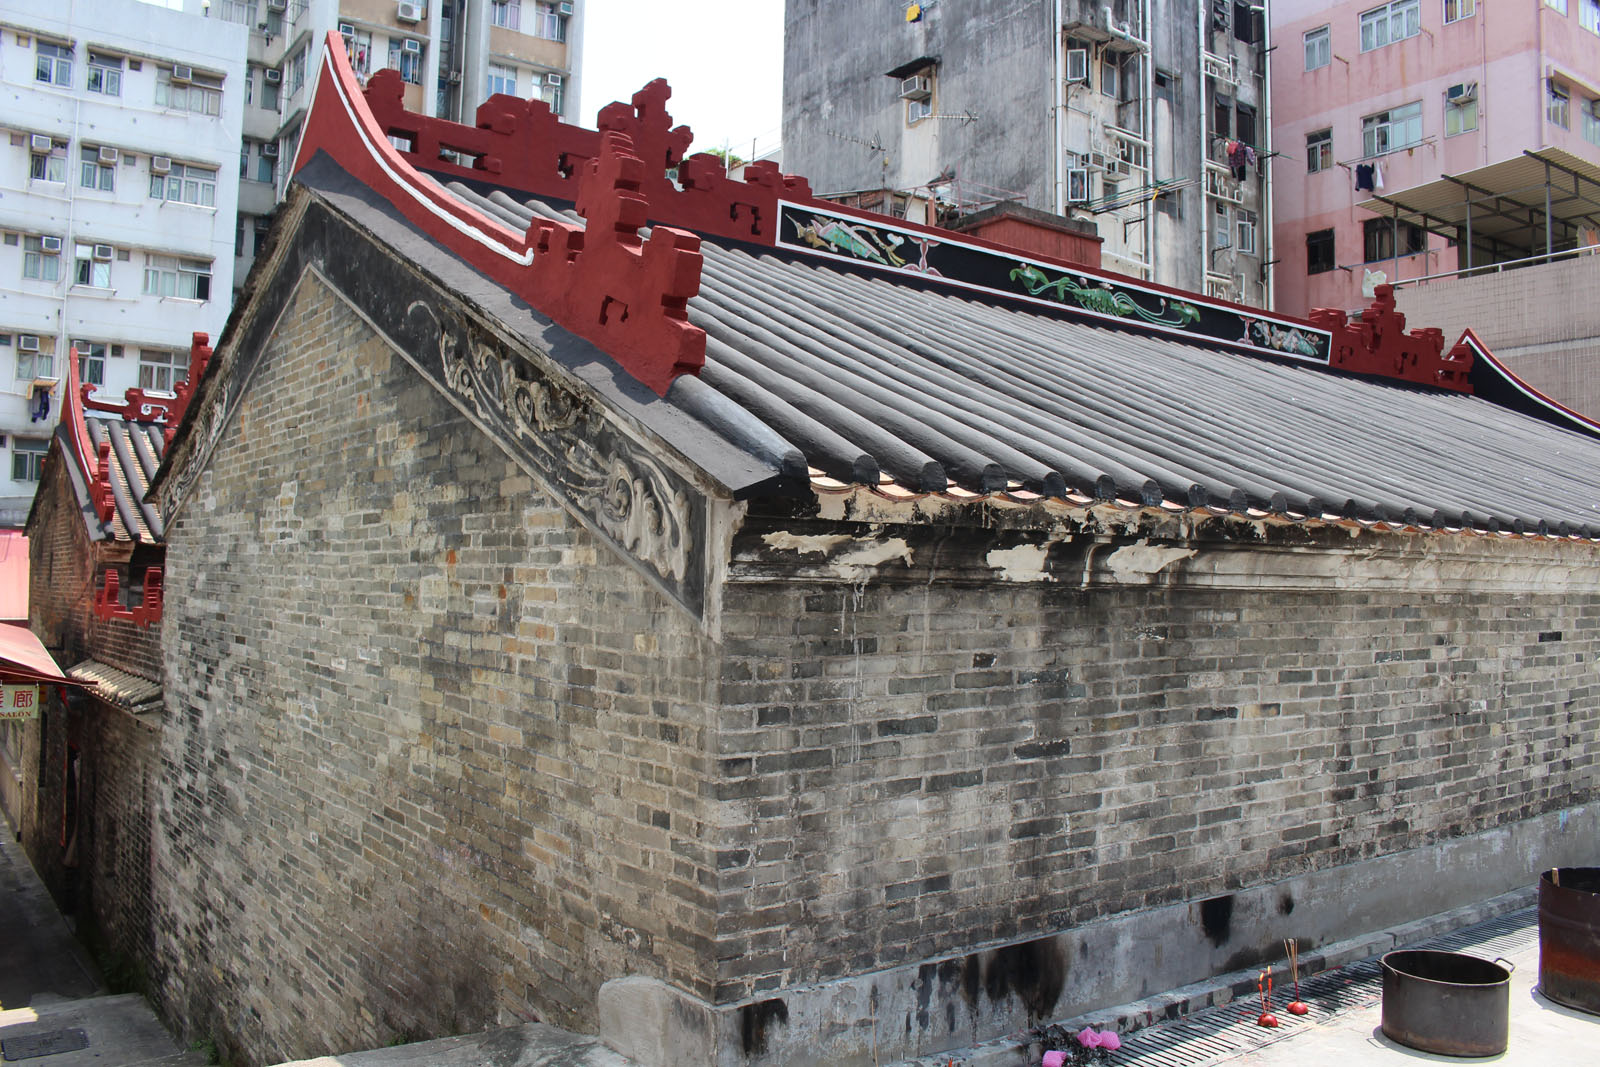 Photo 2: Man Mo Temple (Tai Po)